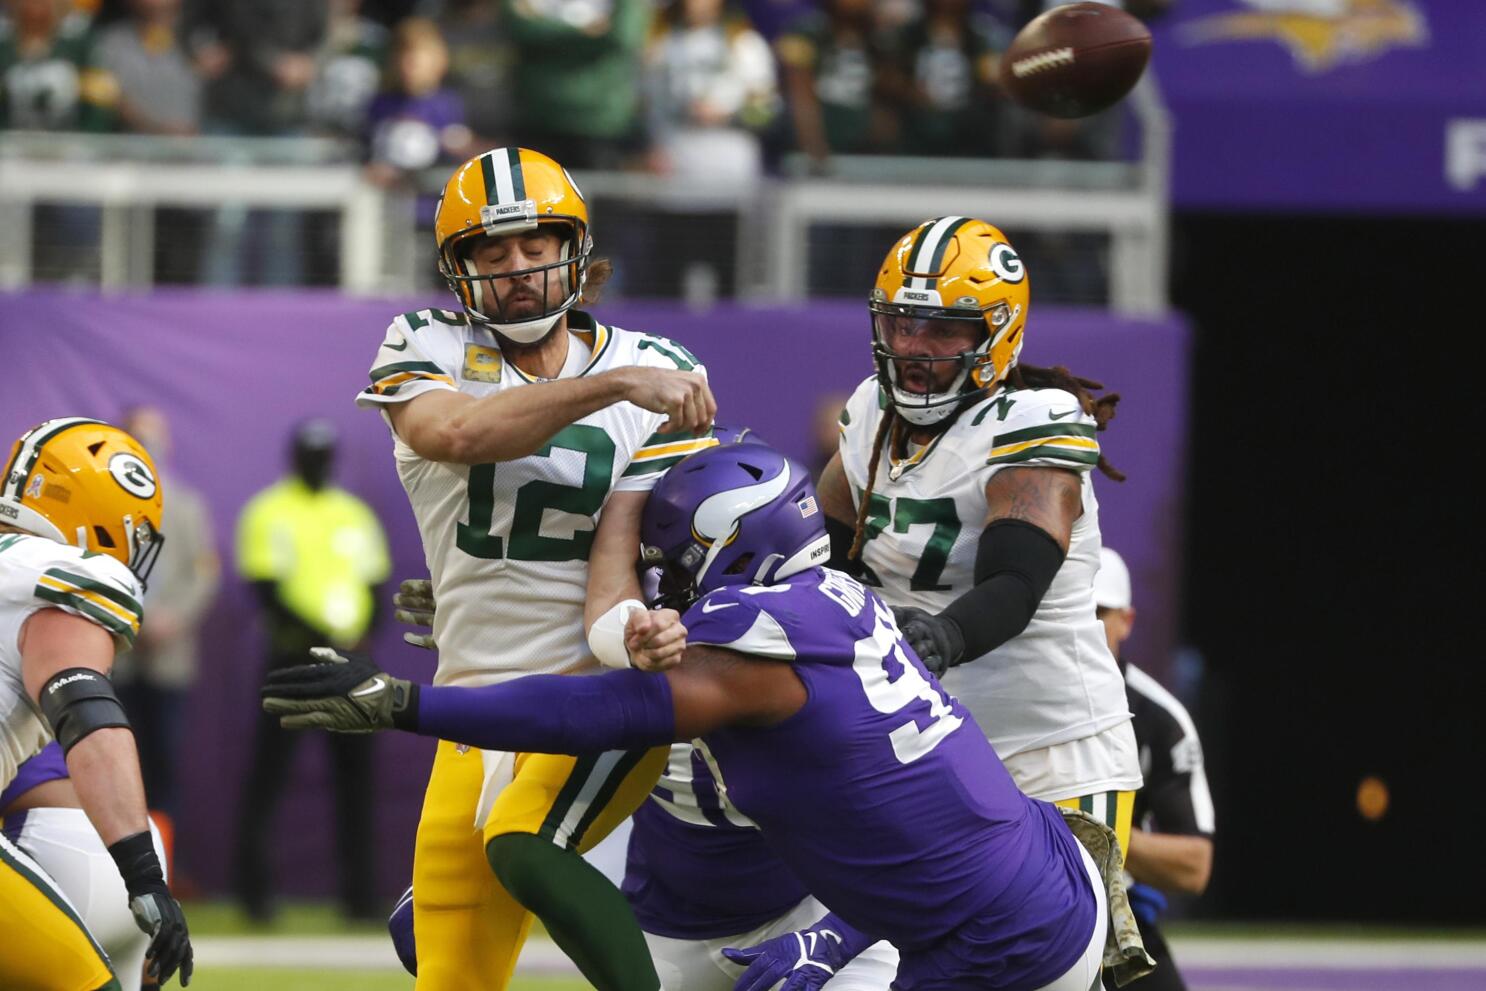 Knee injuries could sideline Packers left tackle David Bakhtiari